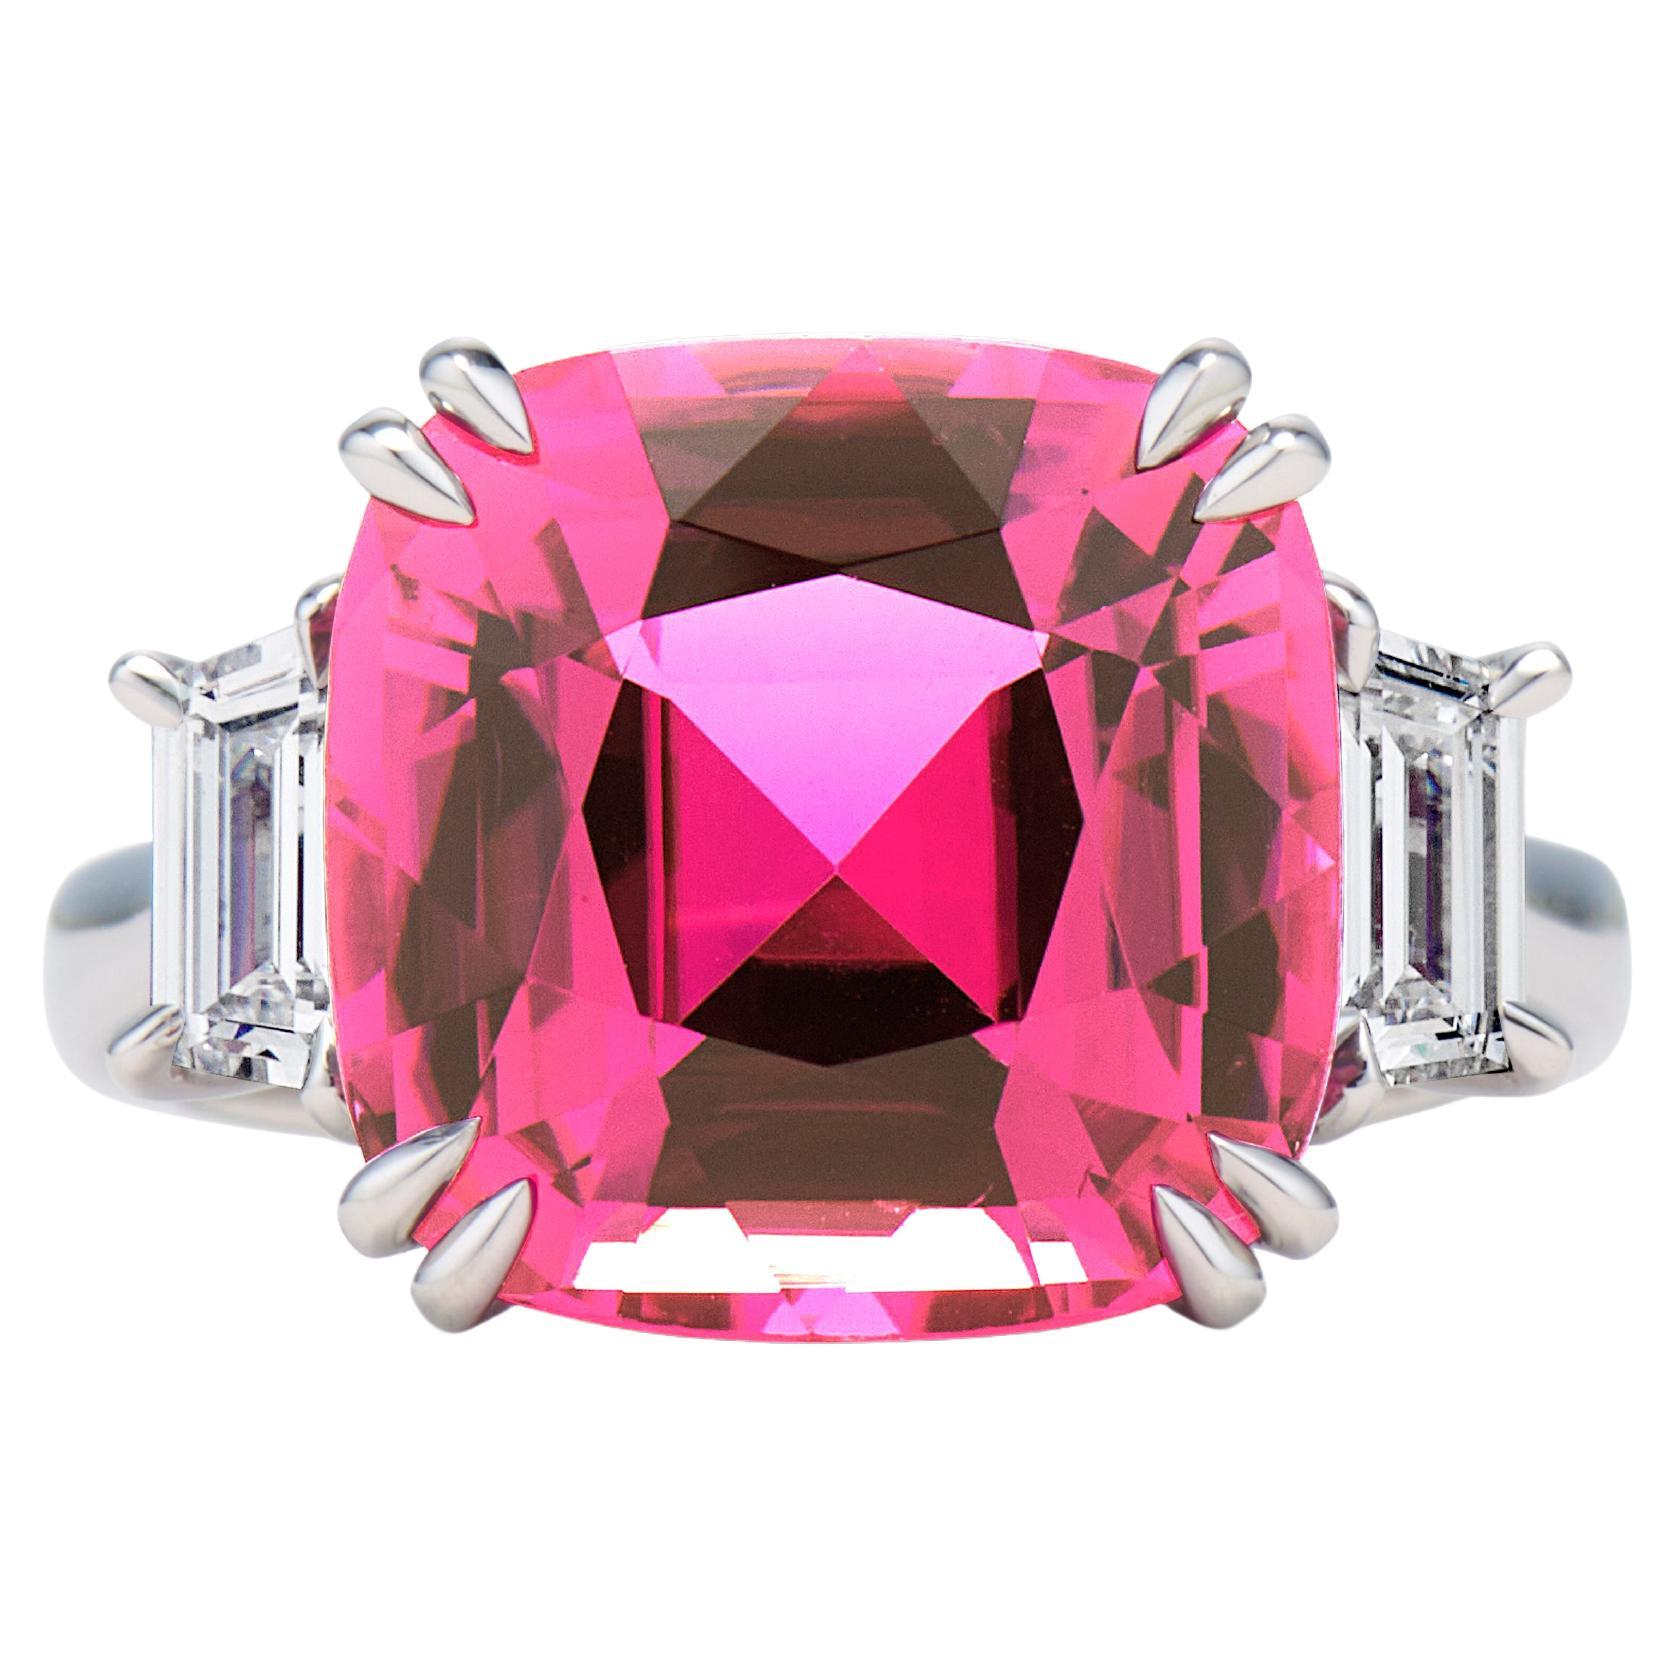 7.7 carat Pink Tourmaline Diamond Ring For Sale